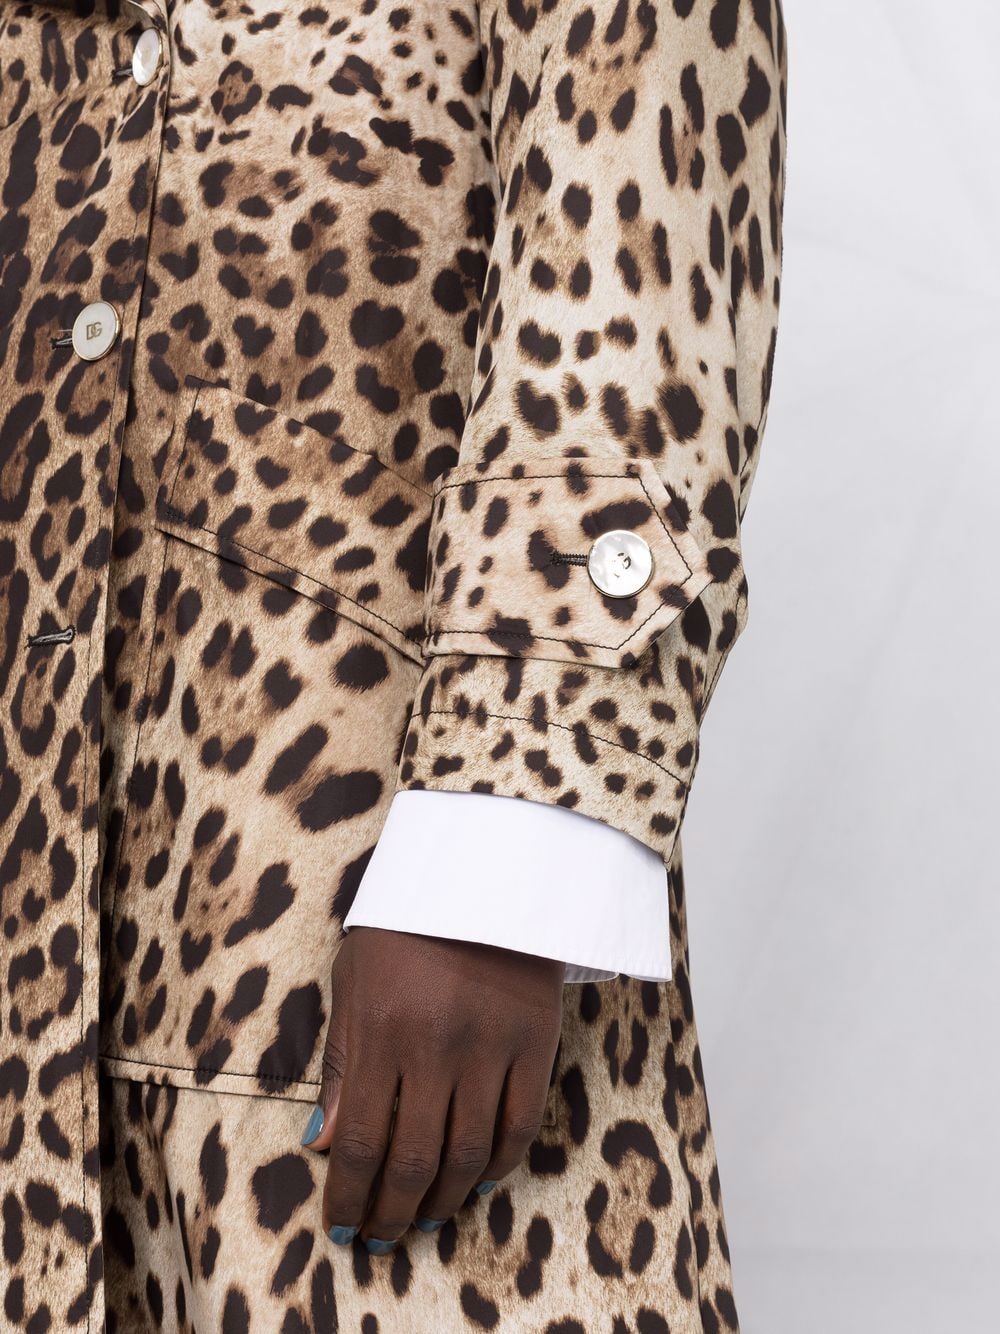 Dolce & Gabbana Leopard-Print Long Trench Coat